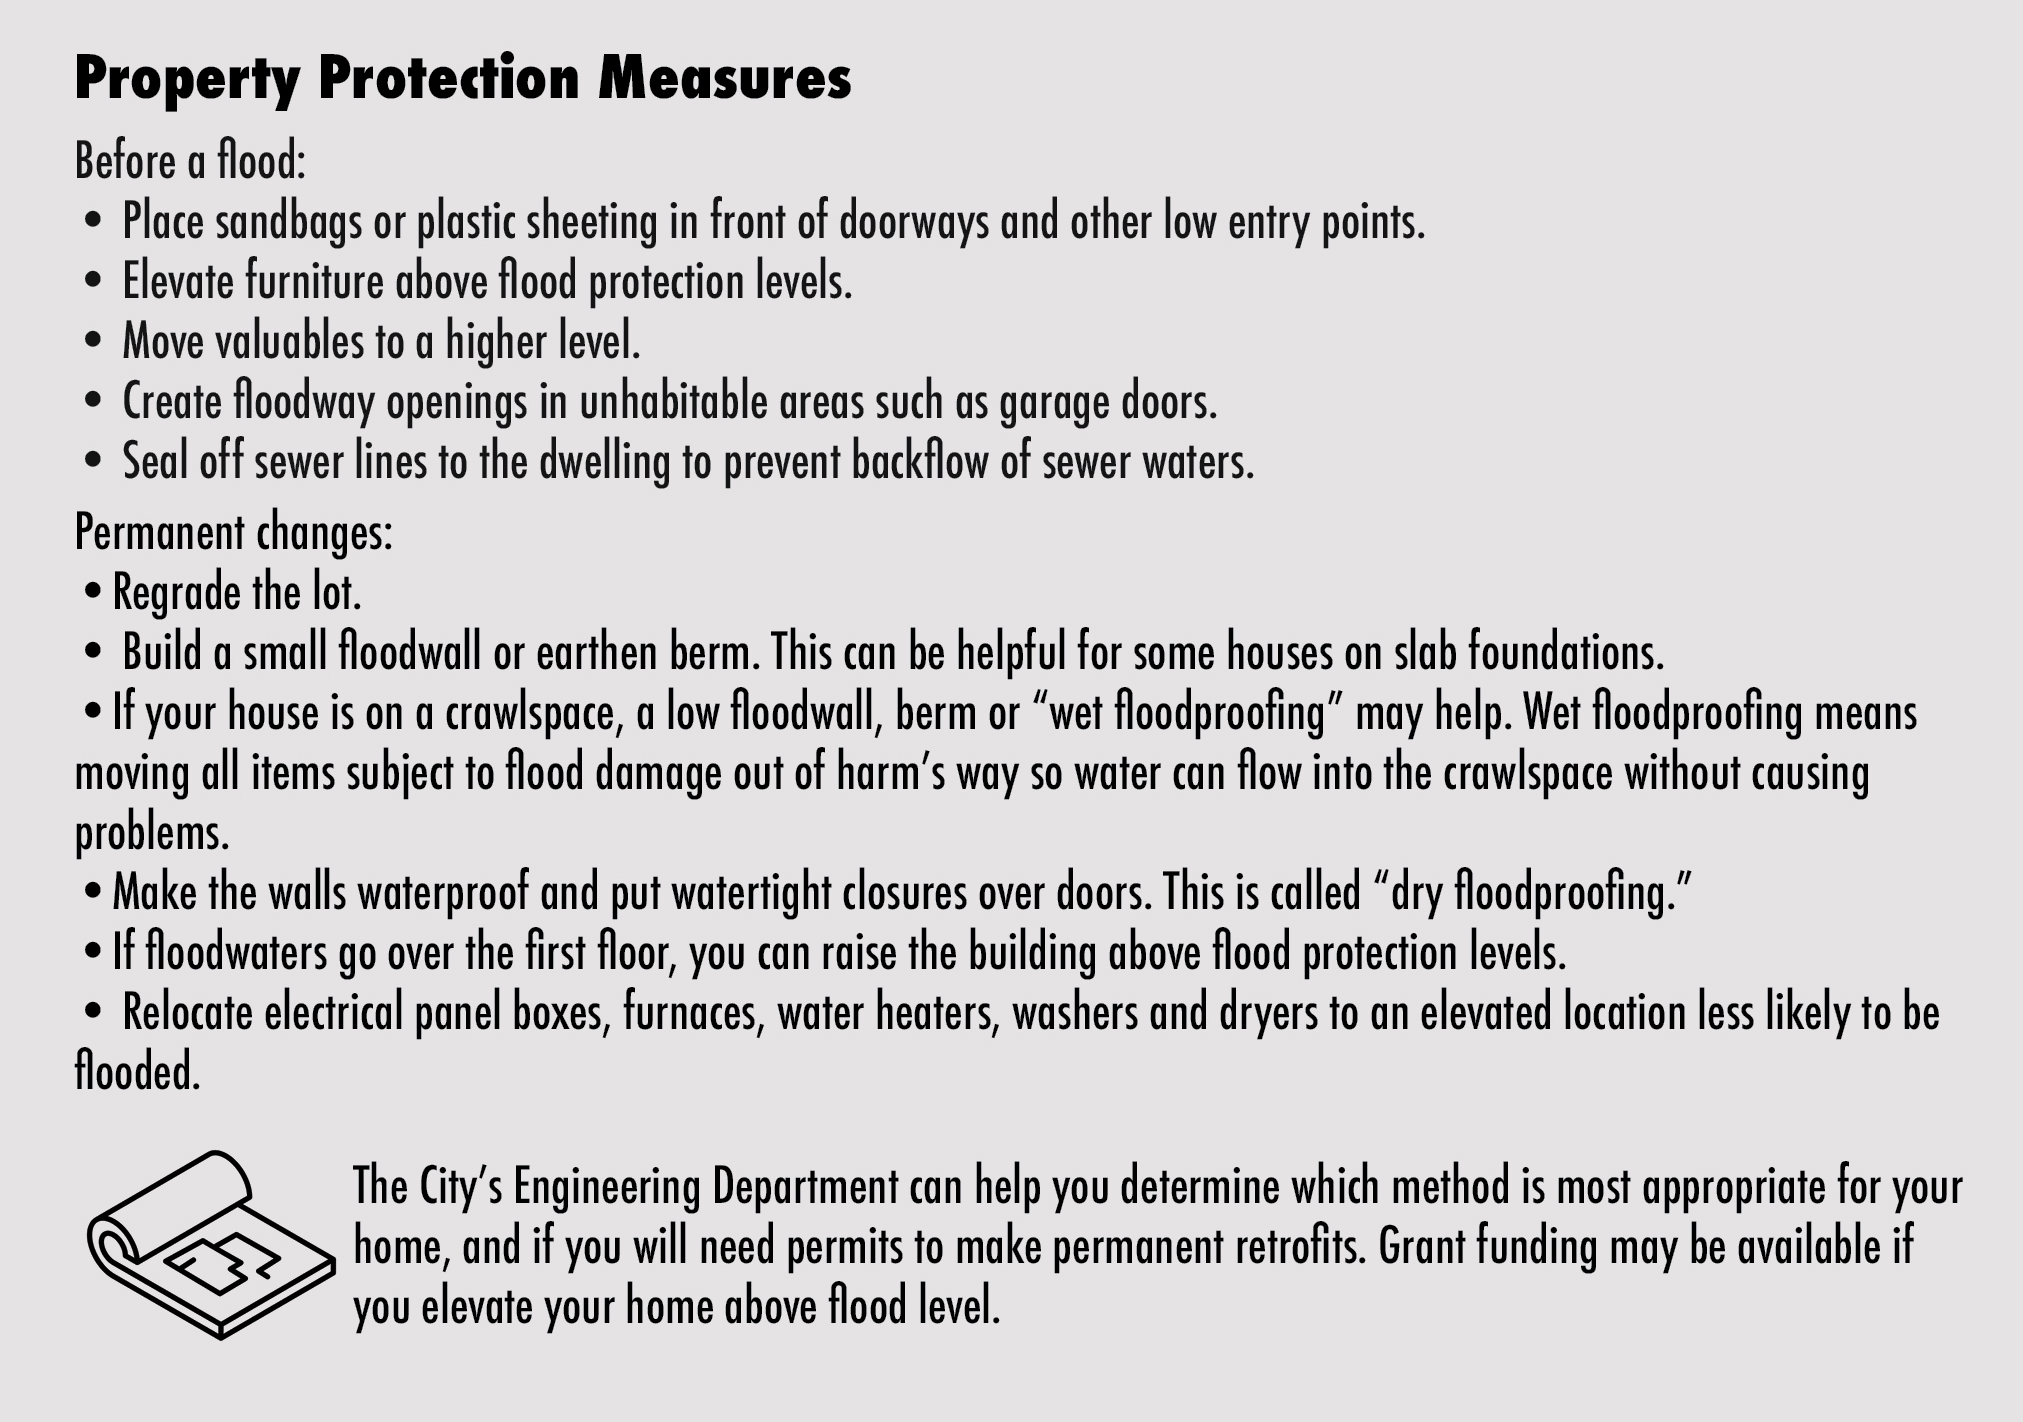 Property Protection MeasuresId.jpg